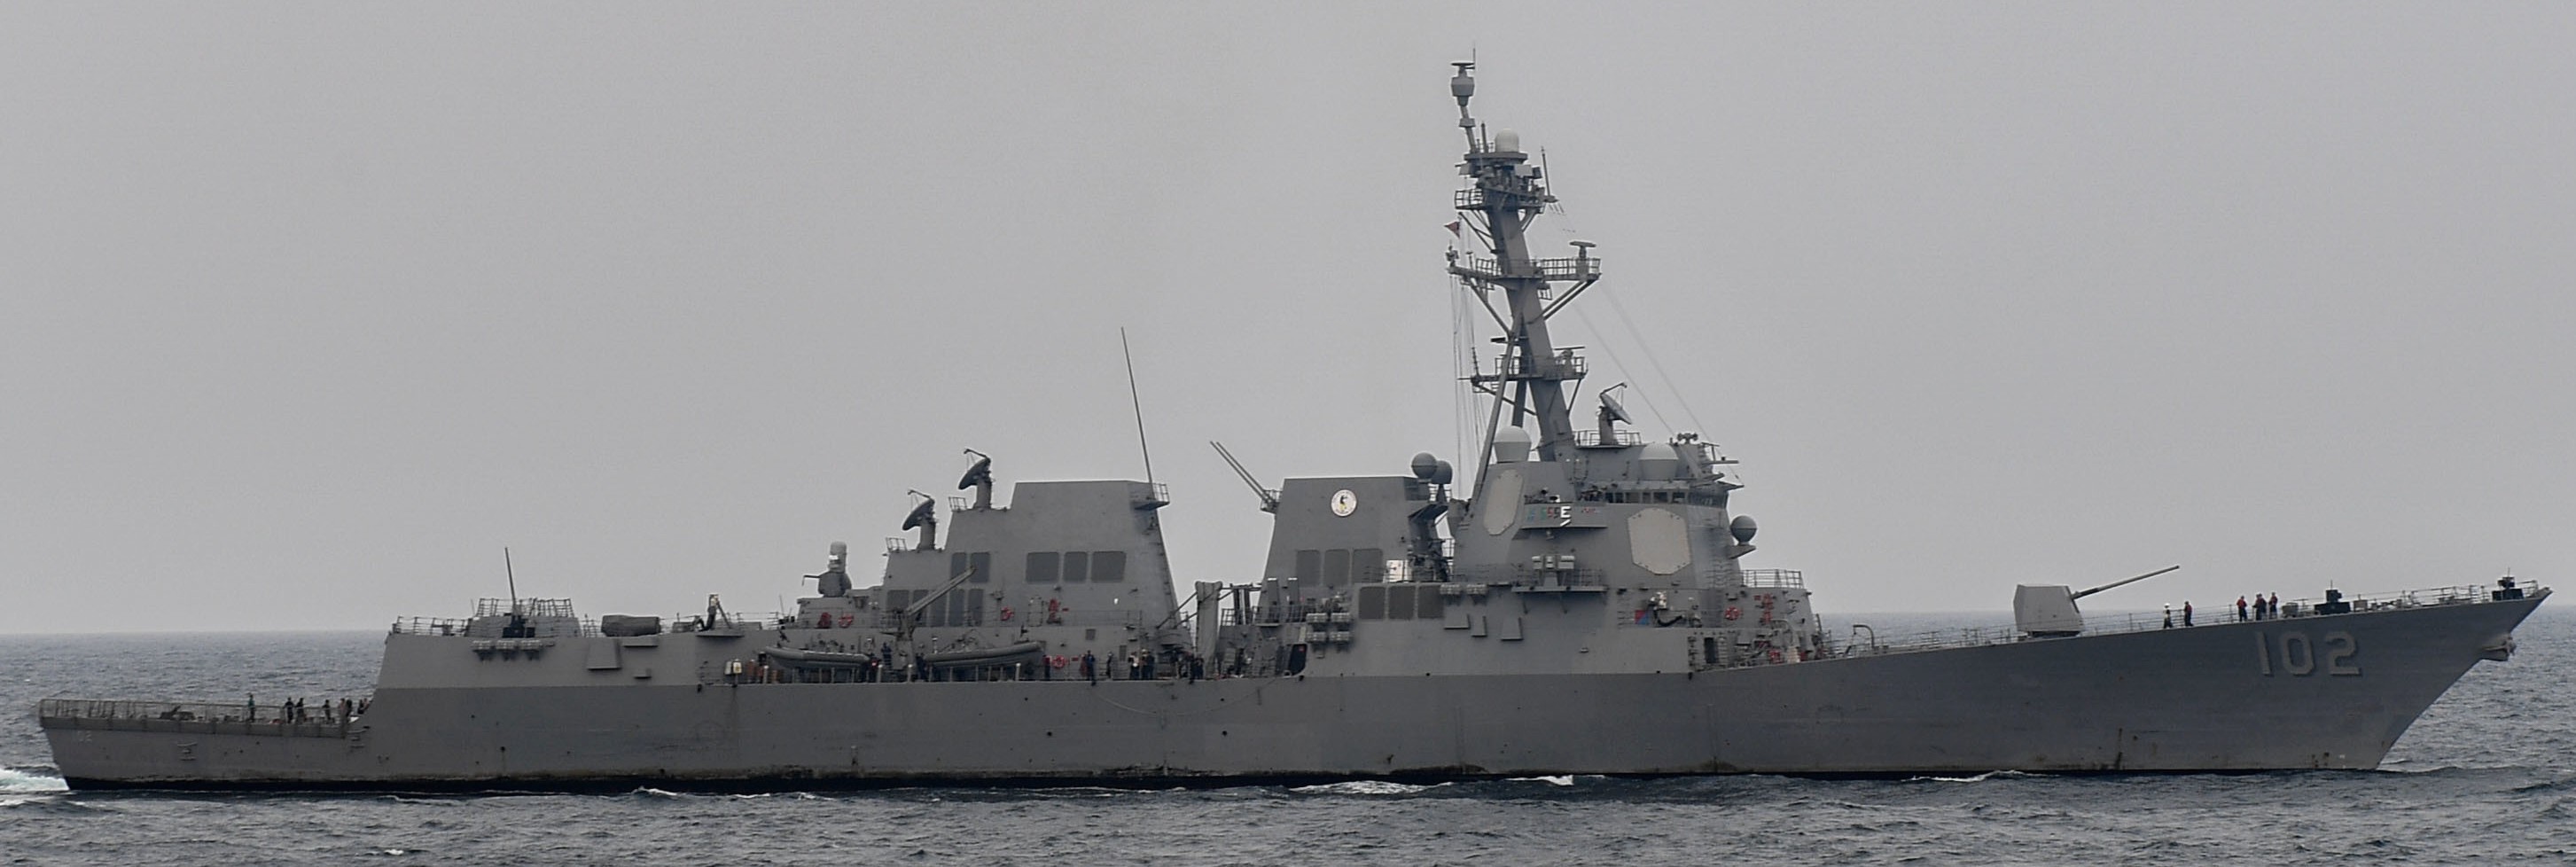 ddg-102 uss sampson arleigh burke class guided missile destroyer aegis us navy indian ocean 88